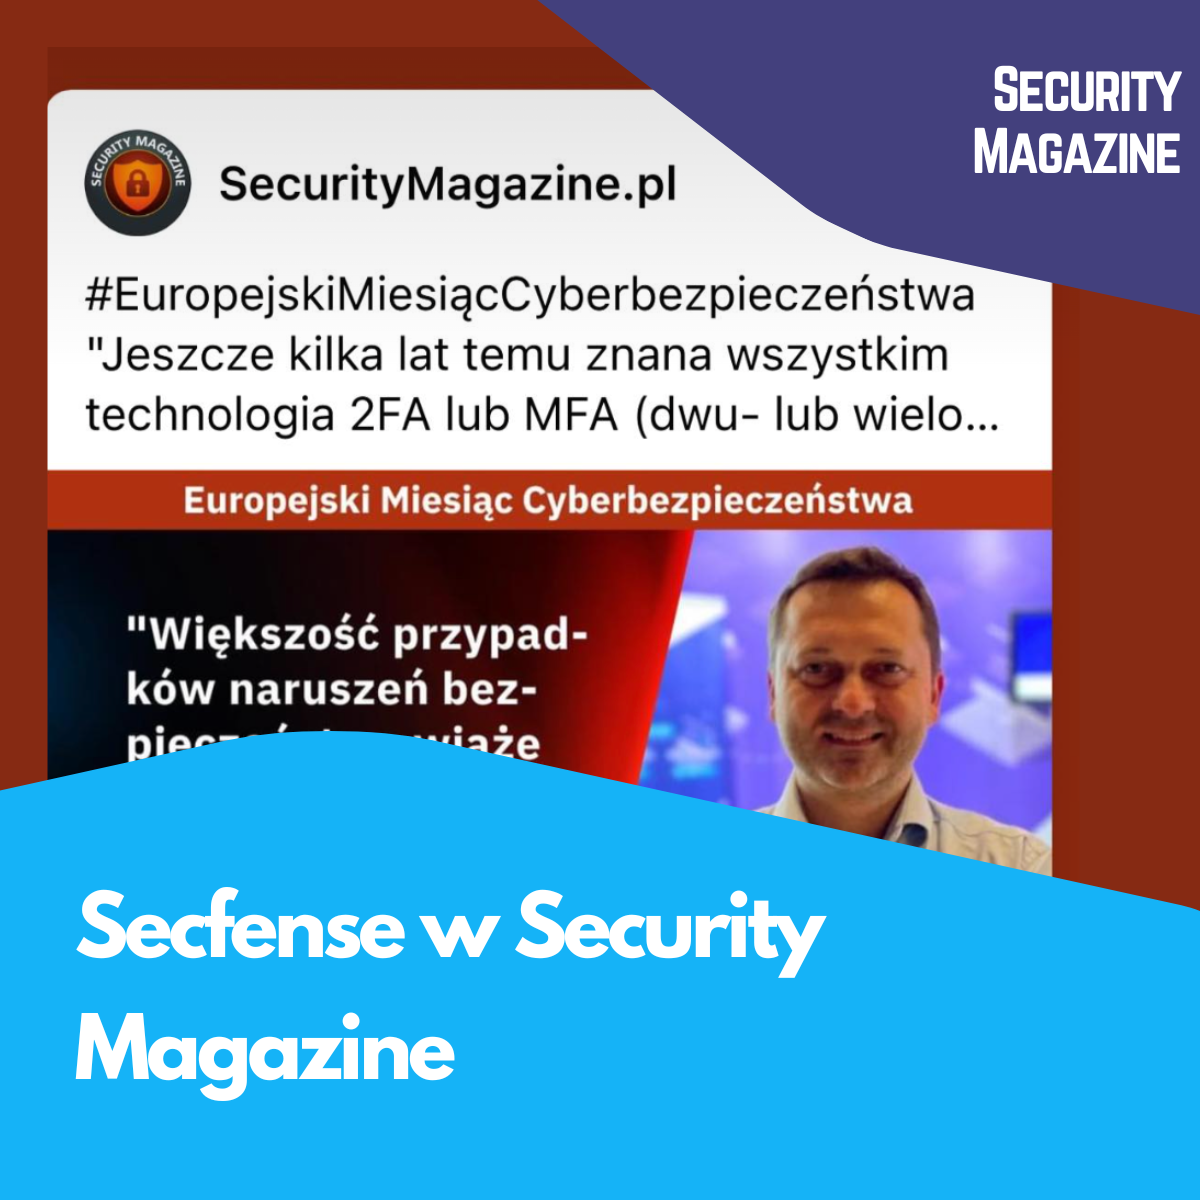 Secfense w Security Magazine